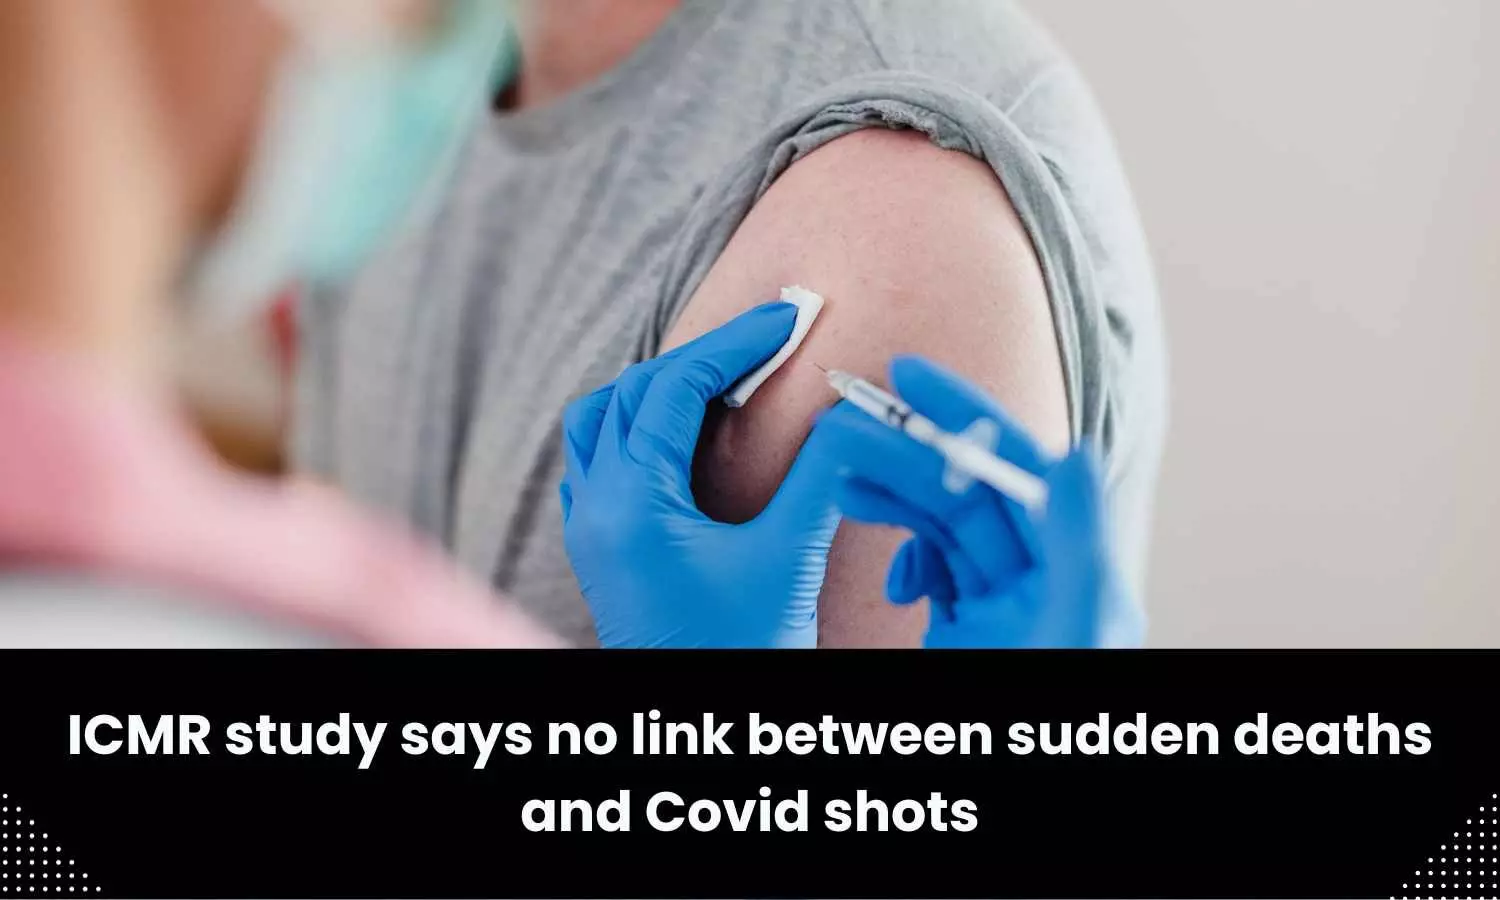 No link between sudden deaths, Covid shots: ICMR study